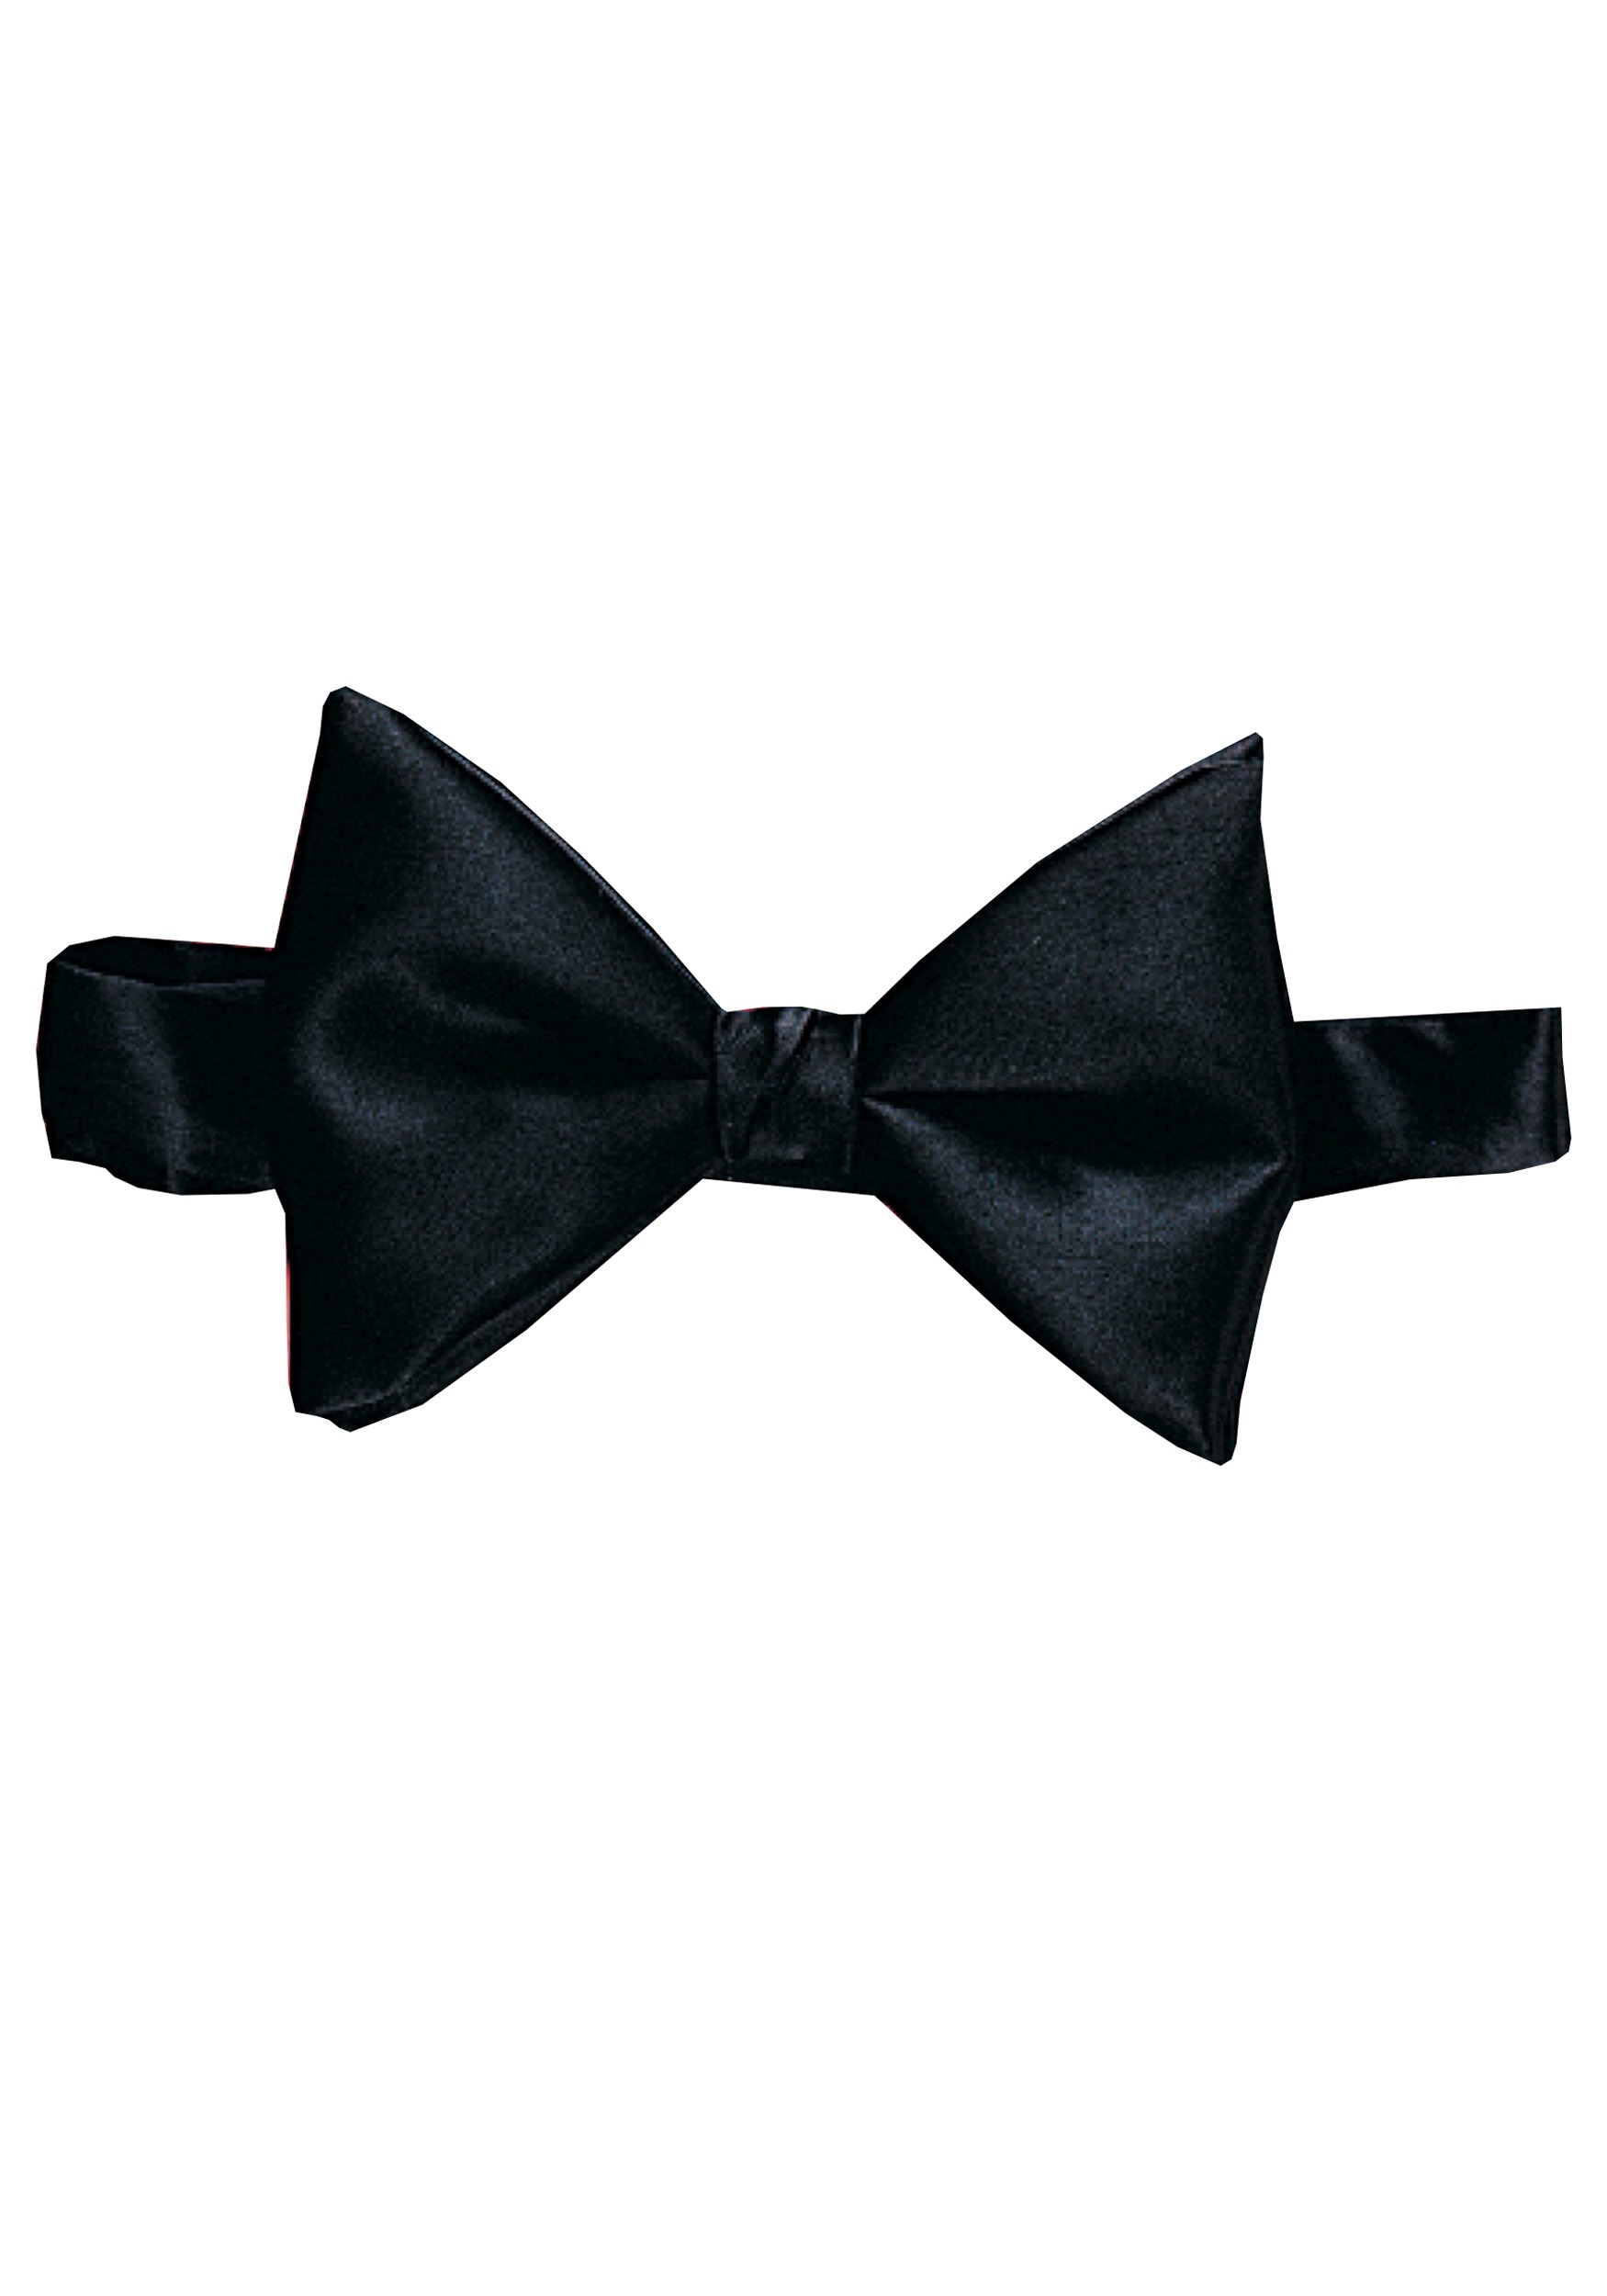 Black satin bow tie. 